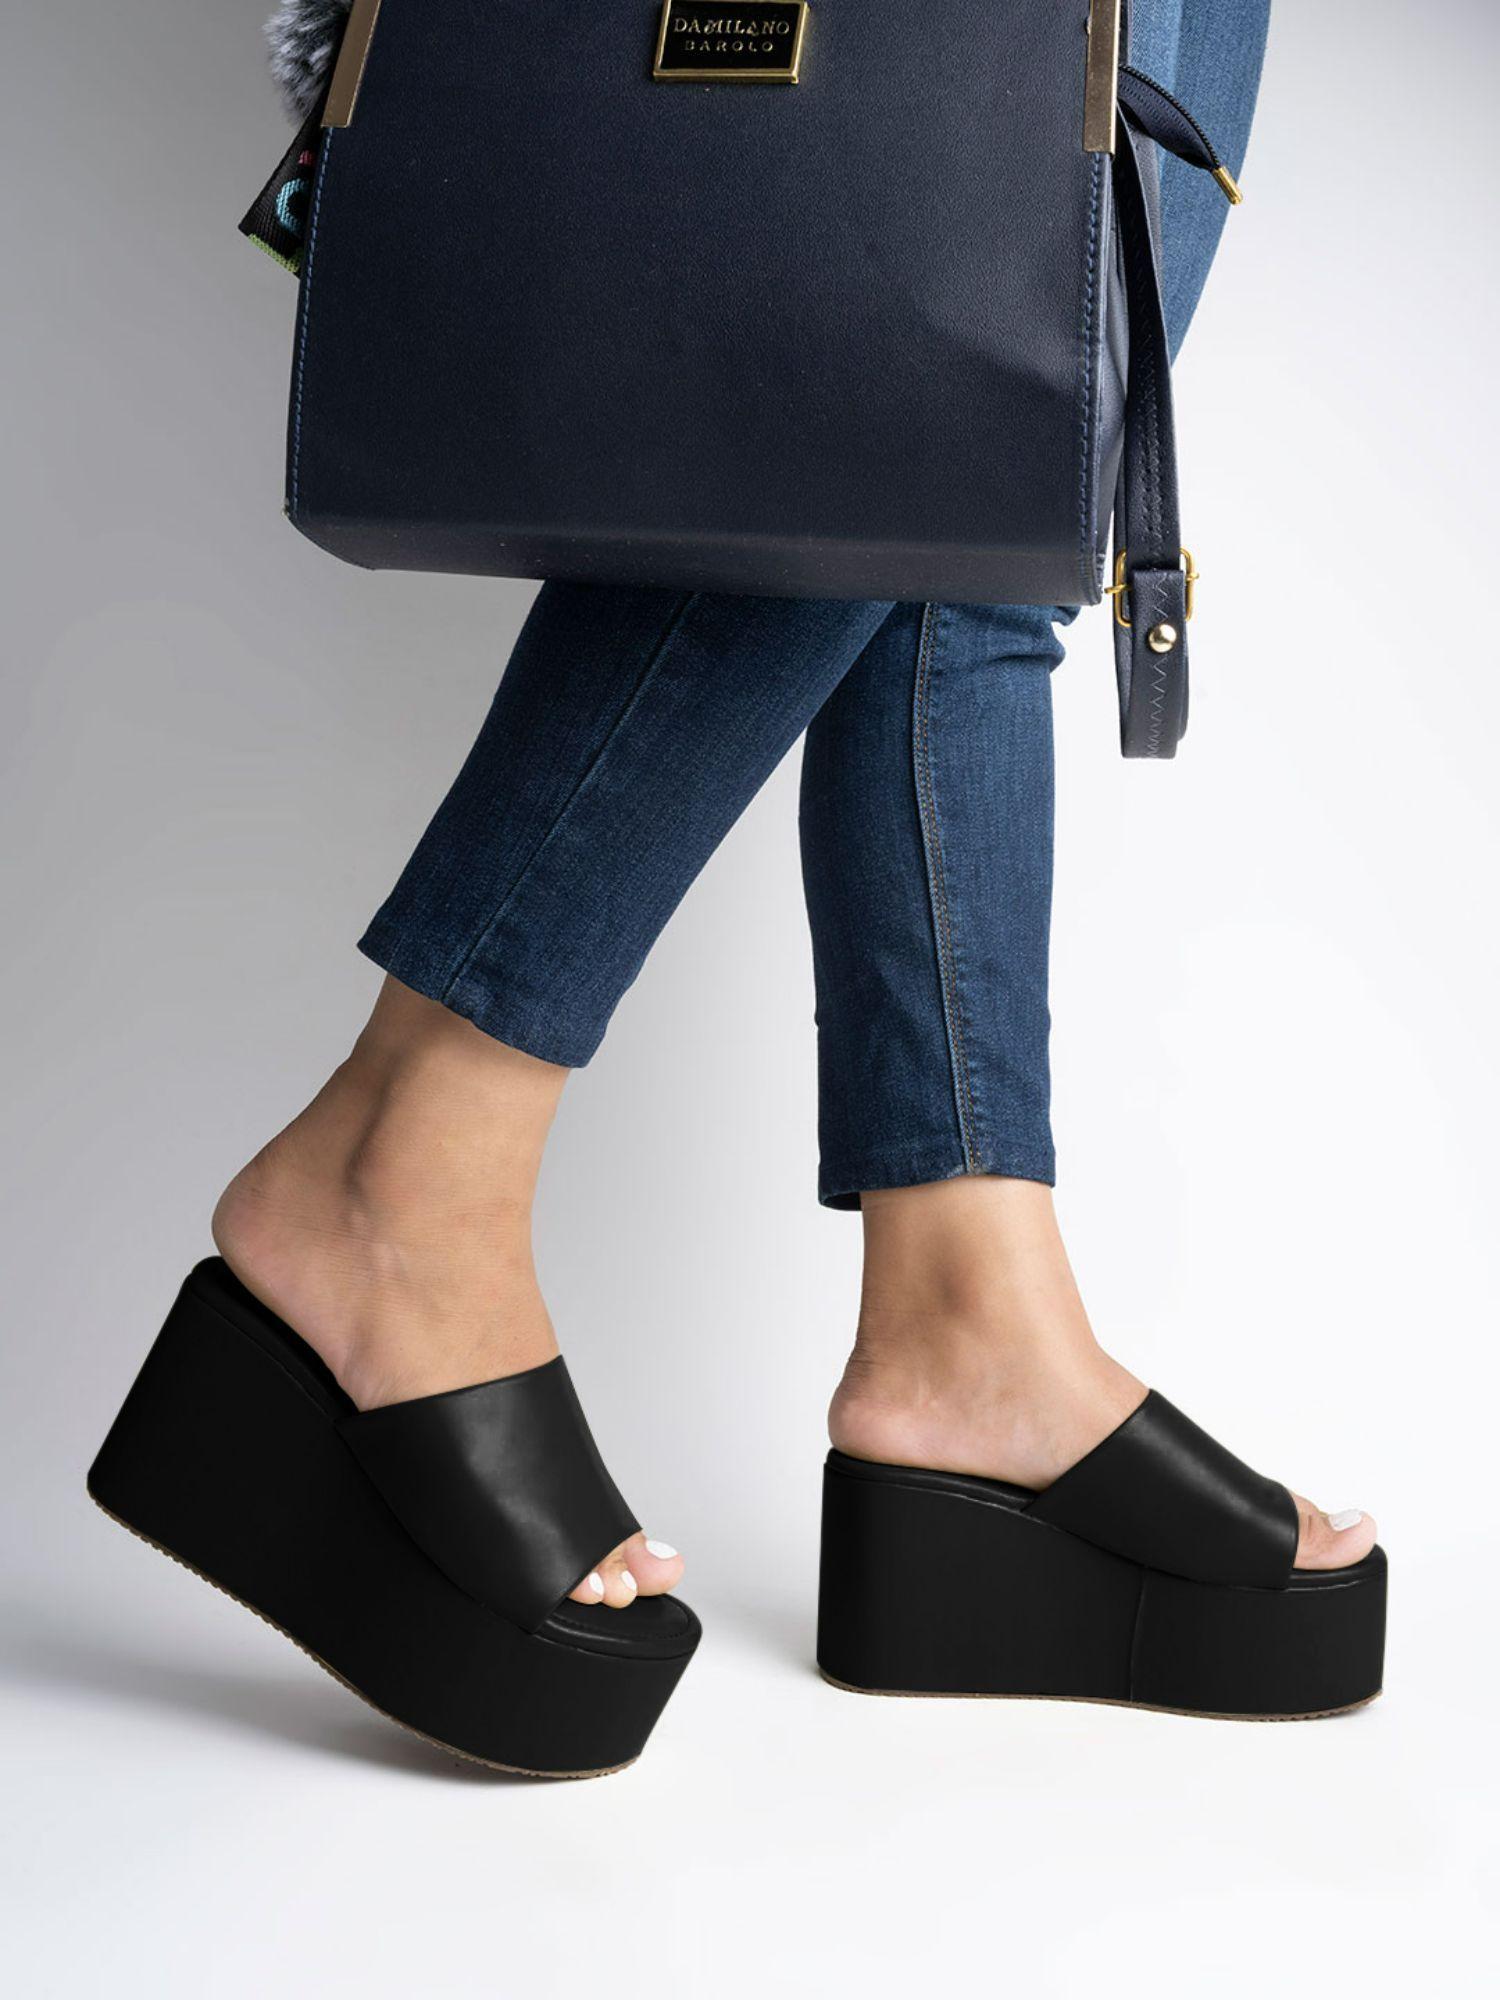 fashionable solid black wedge heels